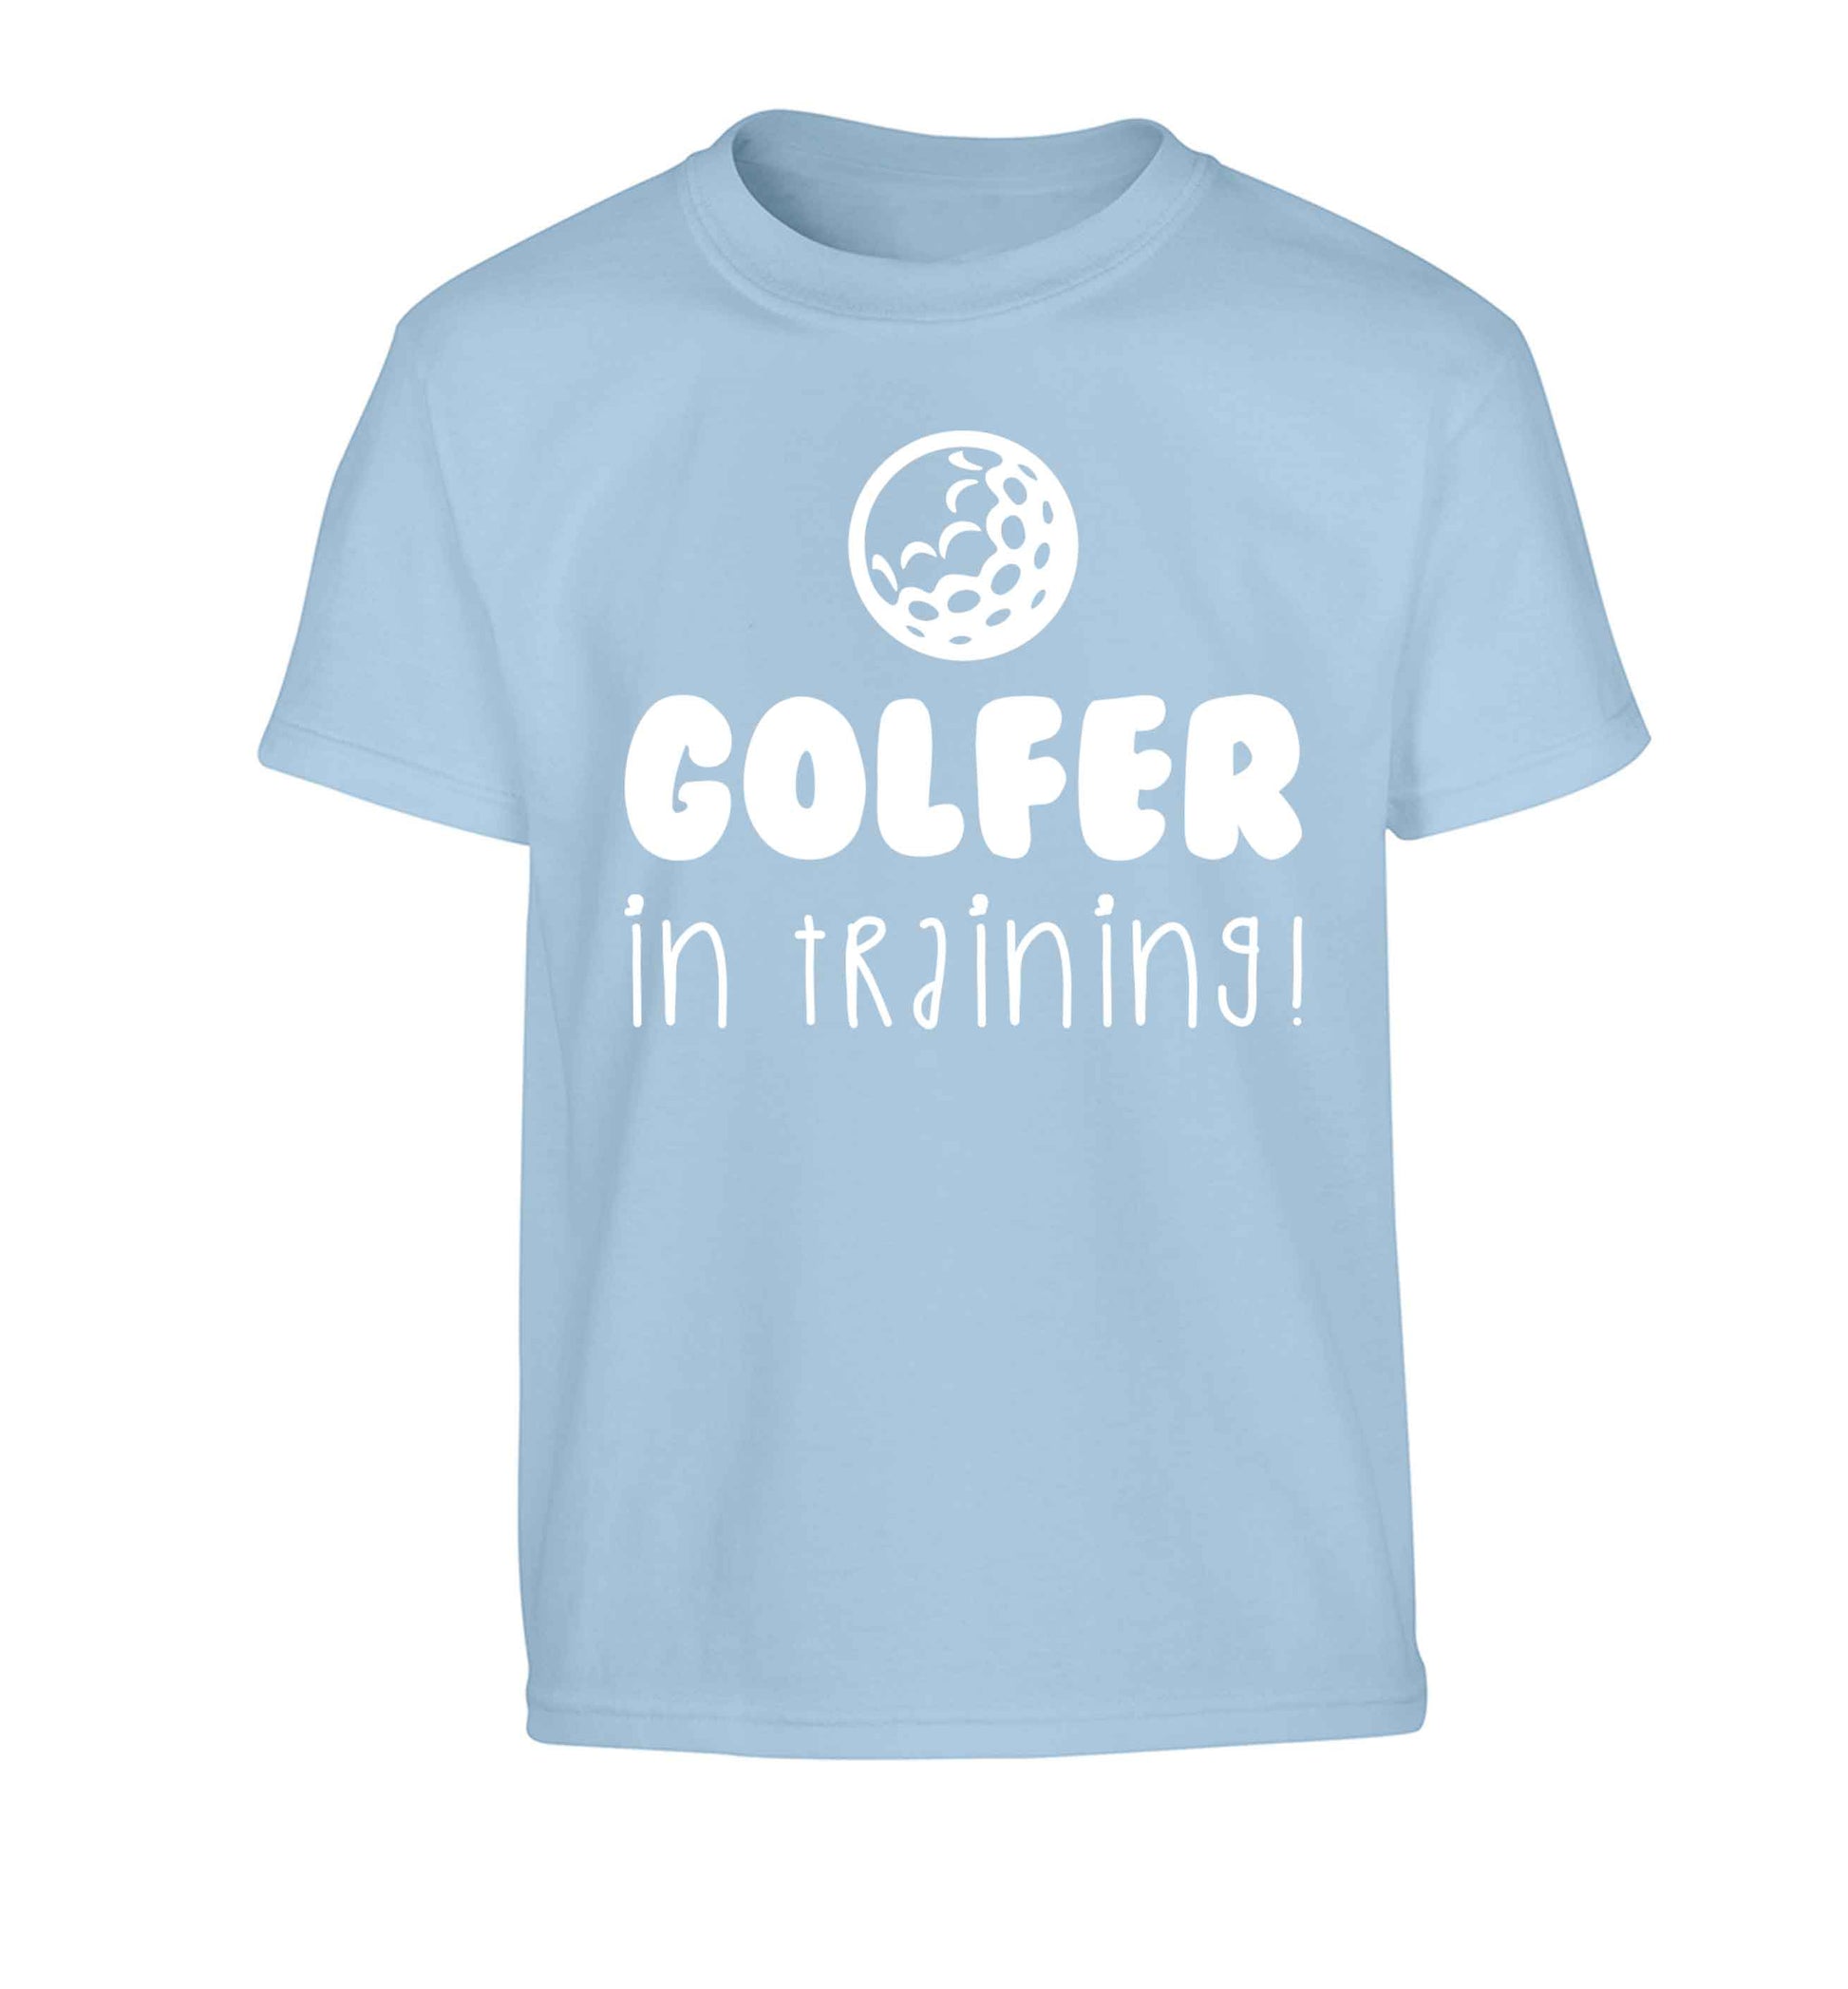 Golfer in training Children's light blue Tshirt 12-13 Years